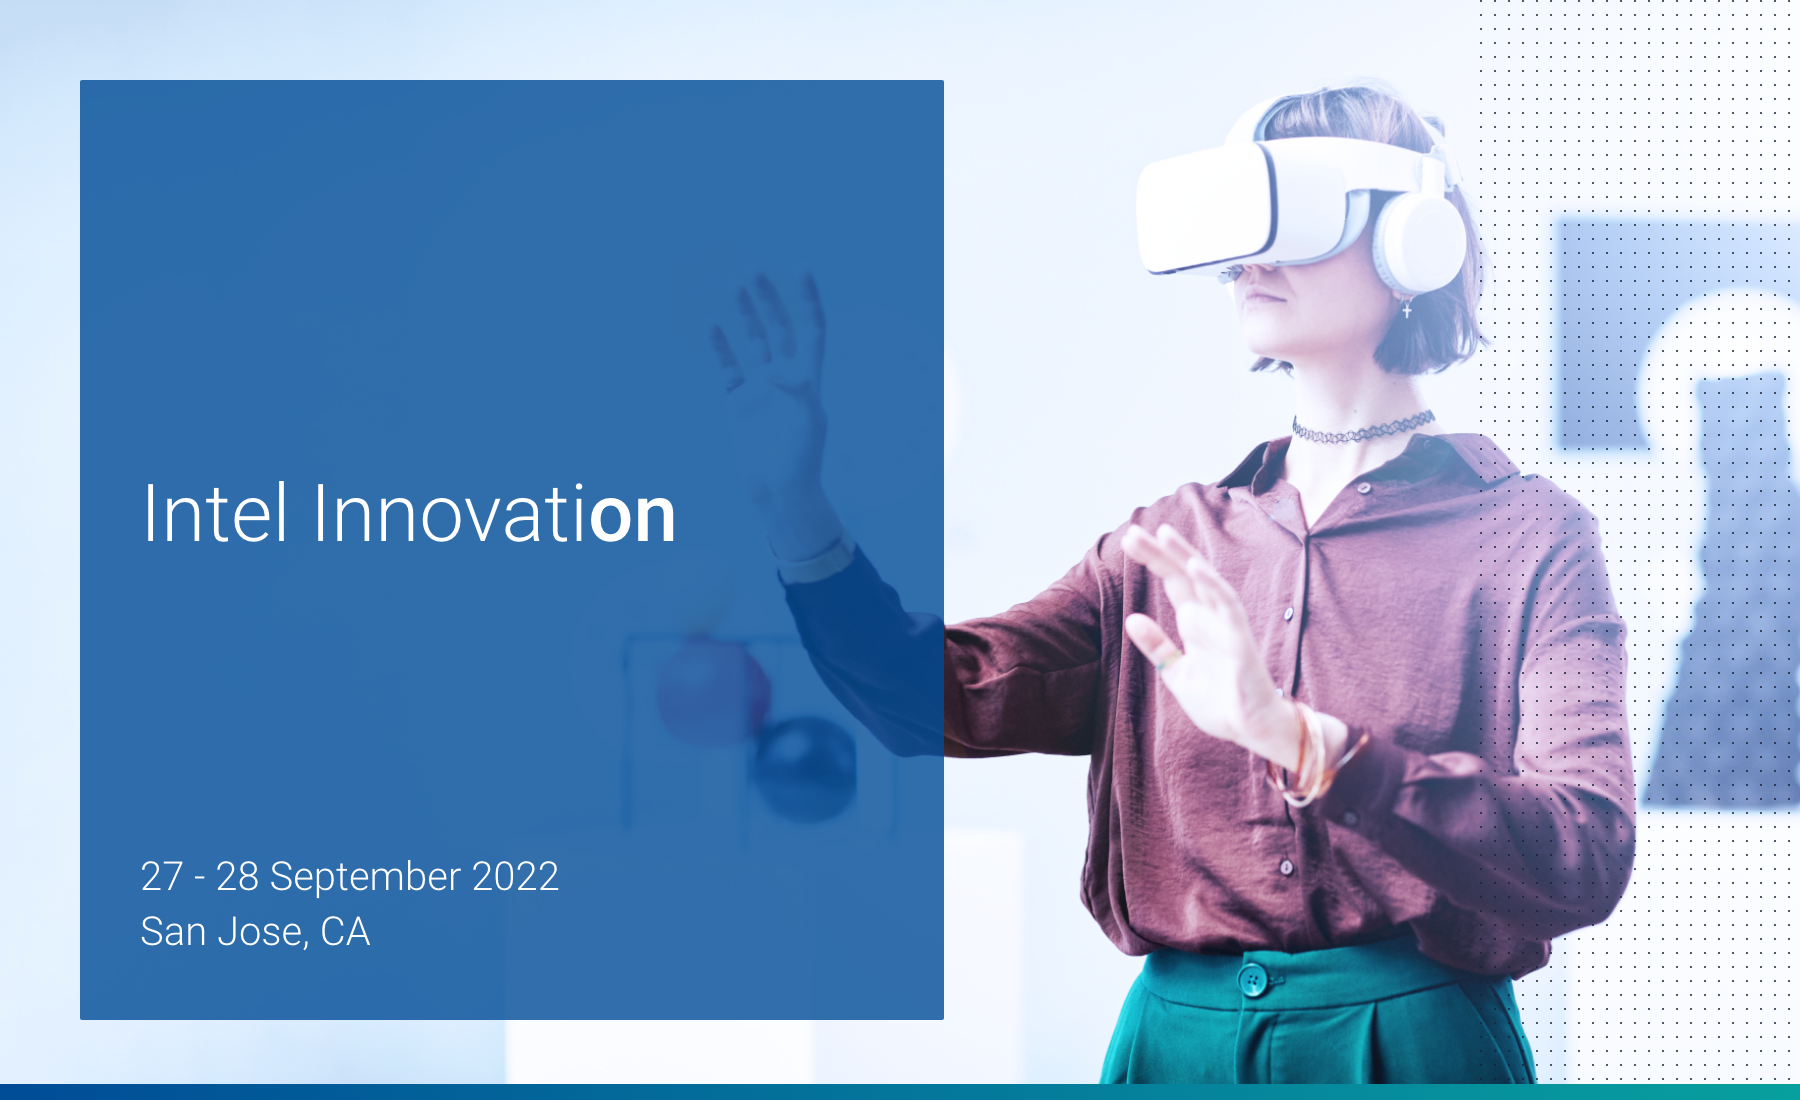 CELUS at the Intel Innovation 2022